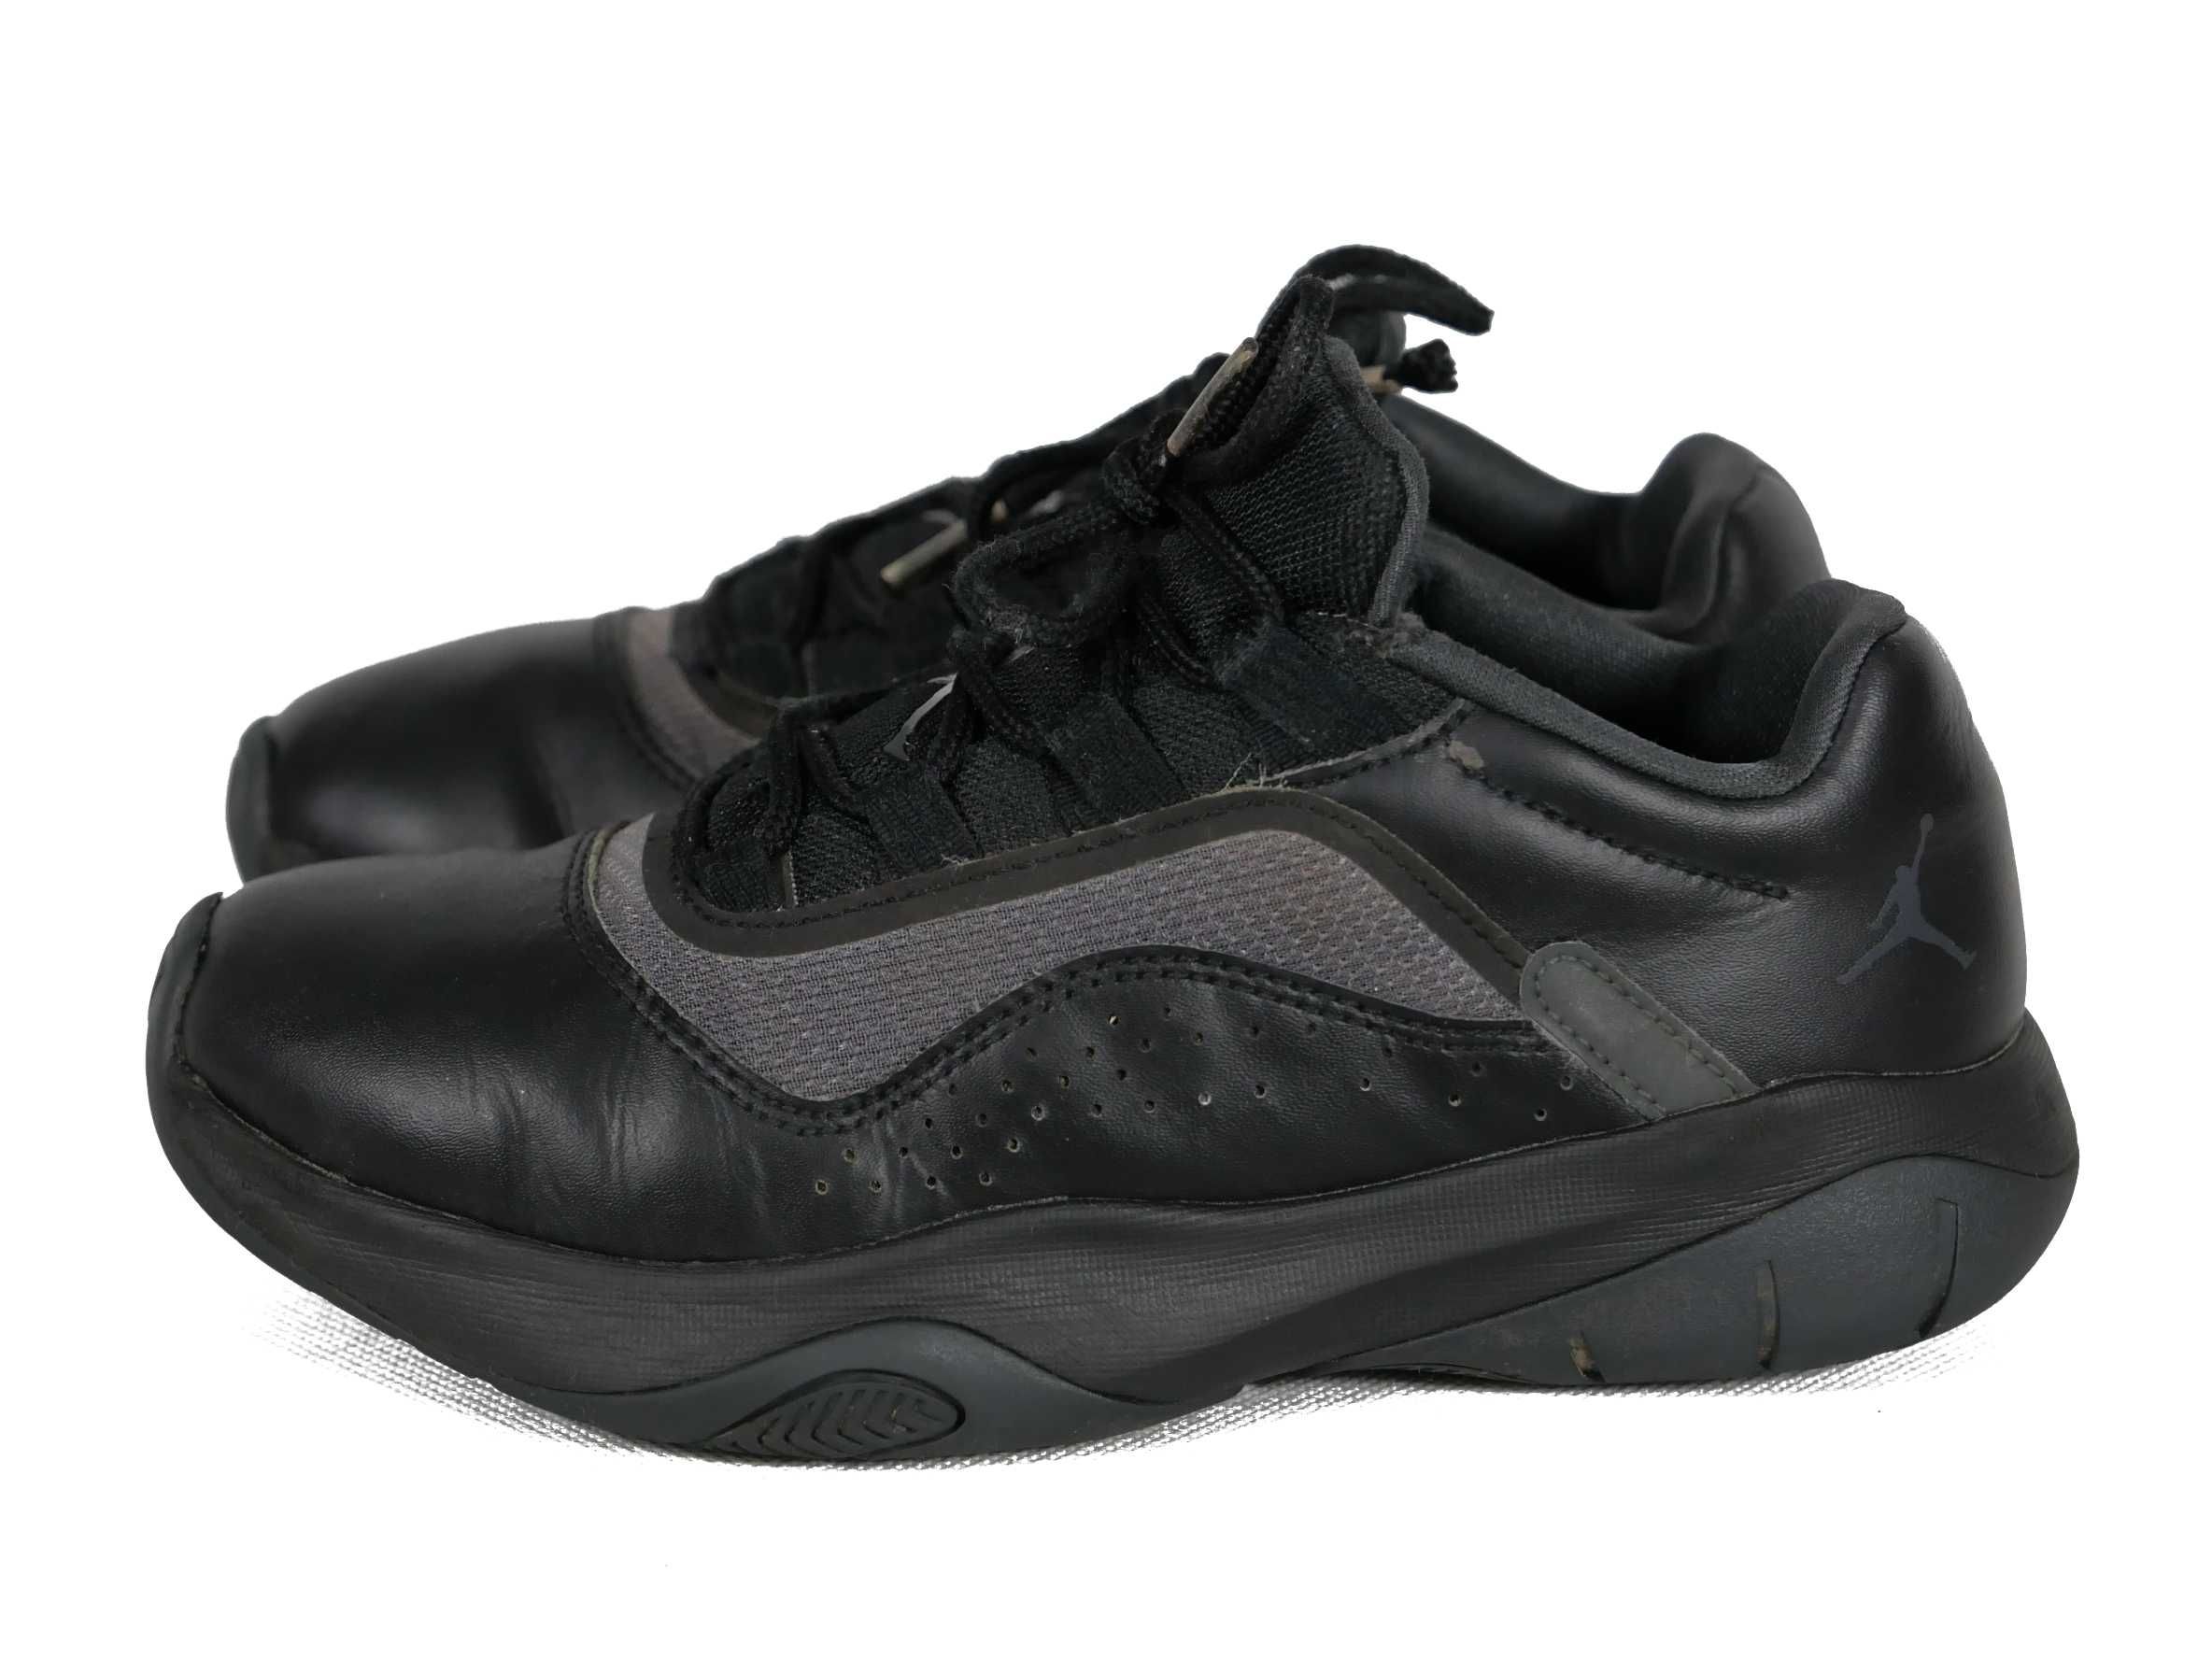 Air Jordan 11 buty sportowe czarne skórzane 36,5